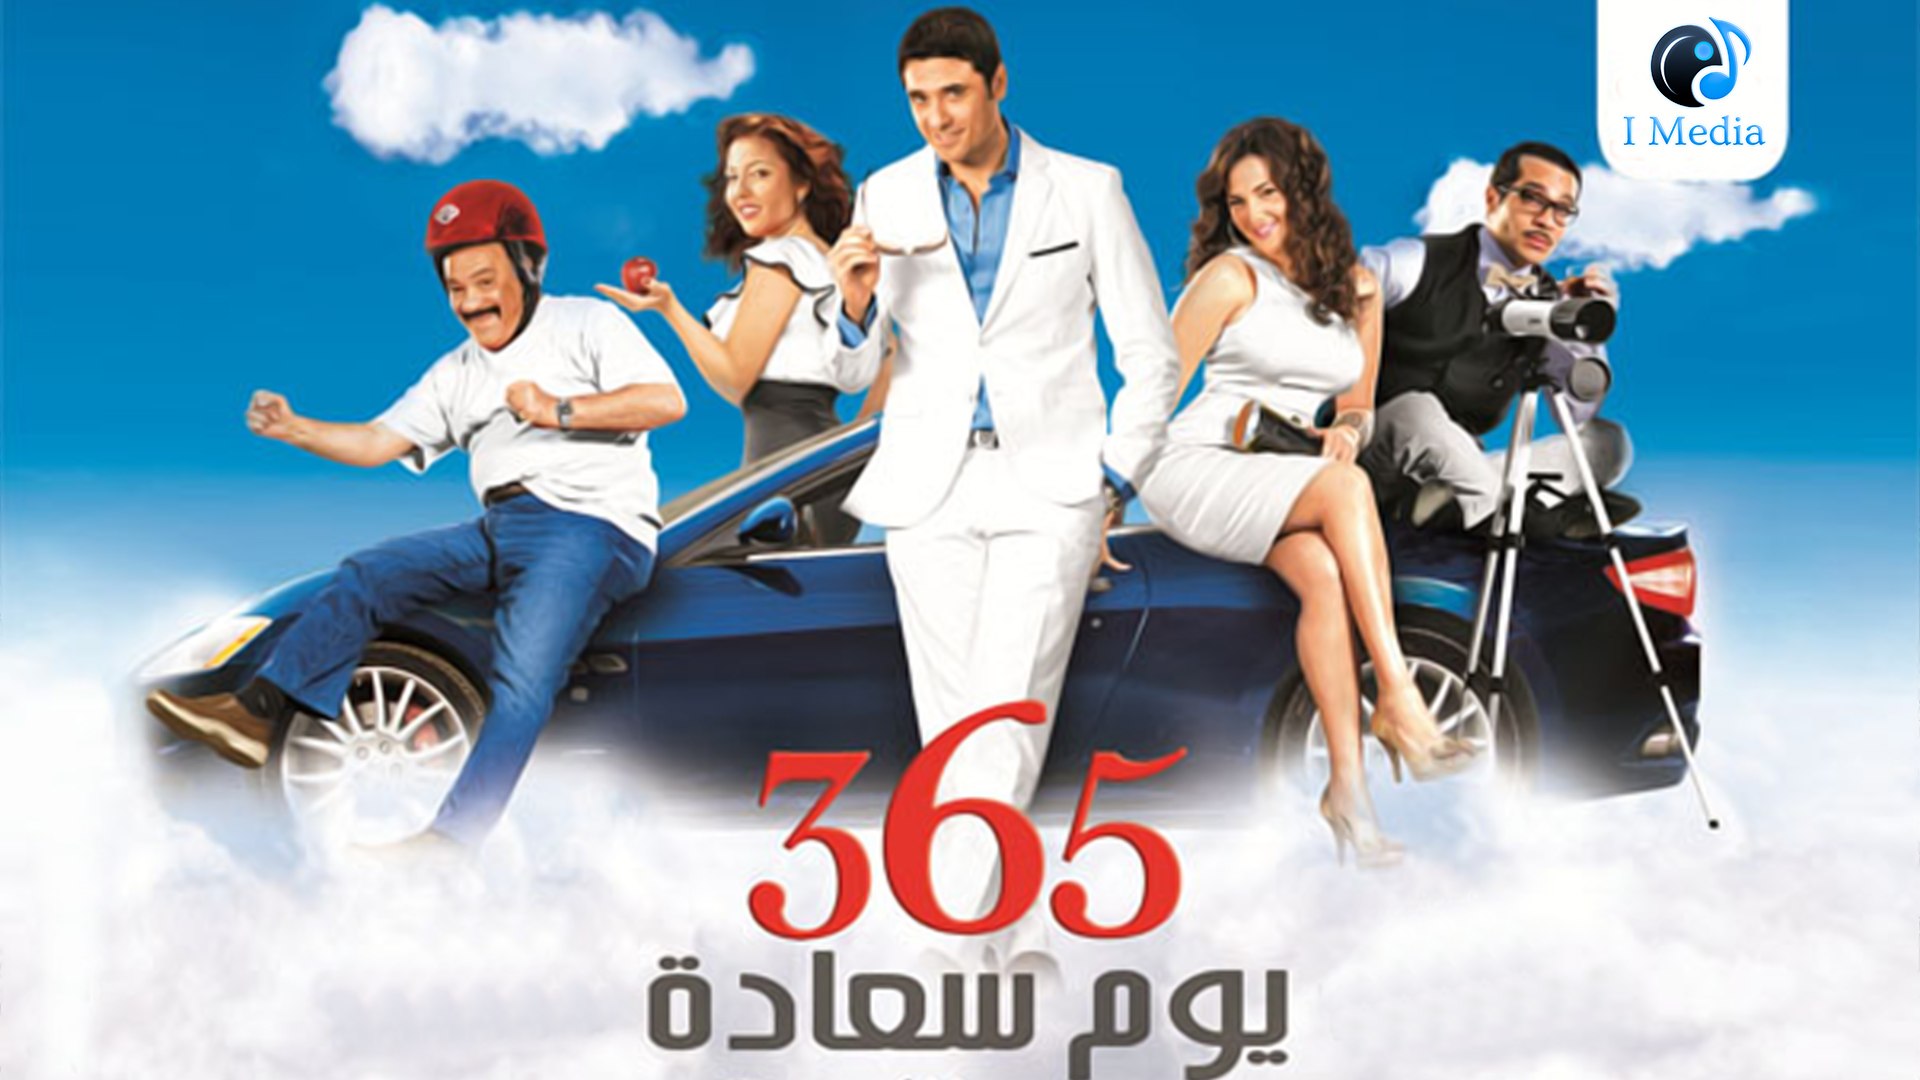 365 yom saada Movie فيلم 365 يوم سعادة - فيديو Dailymotion